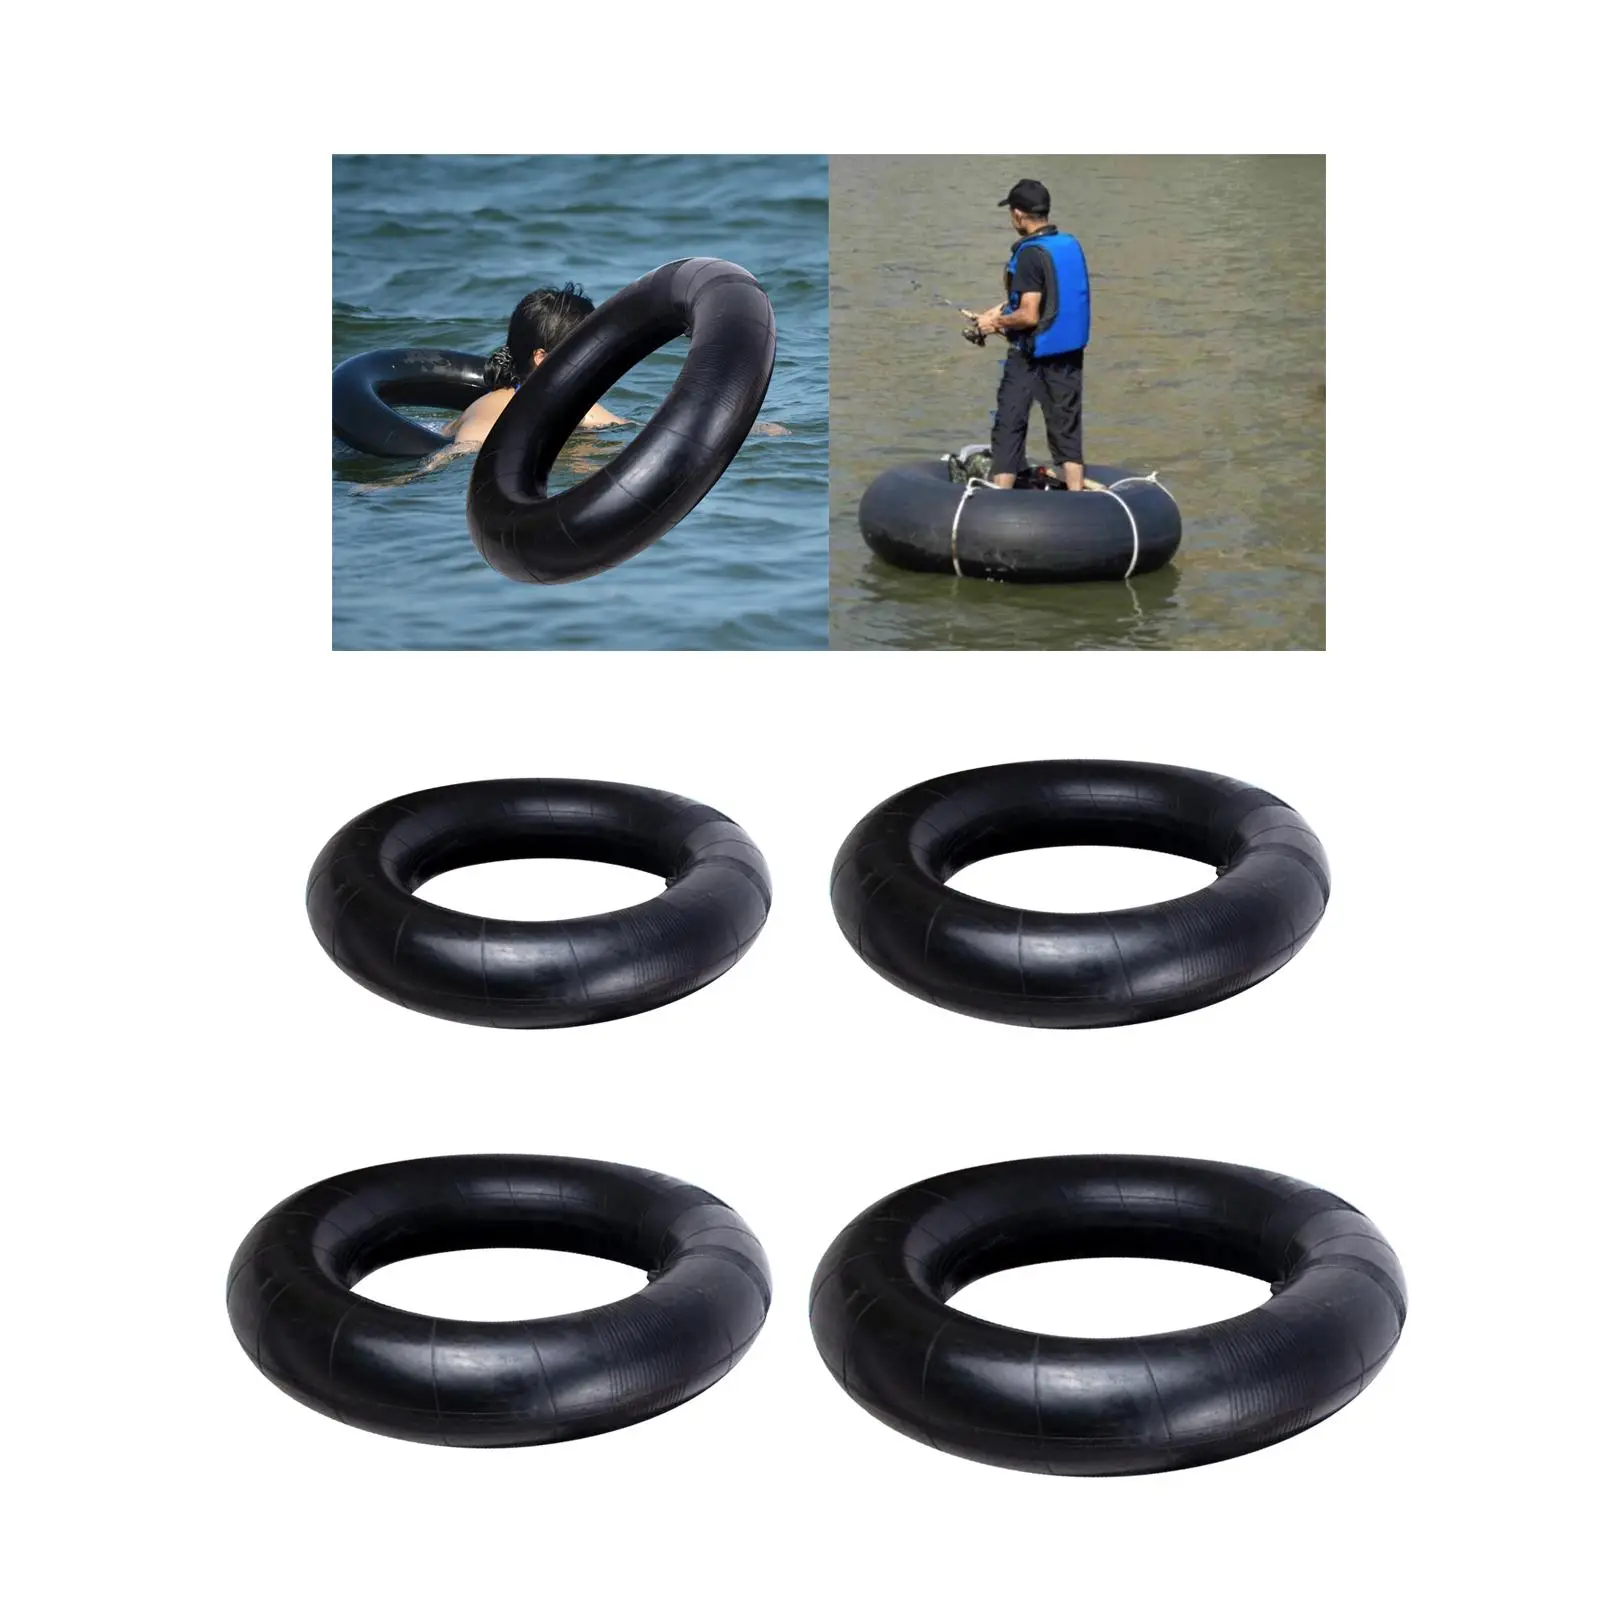 River Tube for Floating Inflatable Pool Float Tube Pool Closing Inner Tube for Adults Swim Tubes Heavy Duty Sledding Float